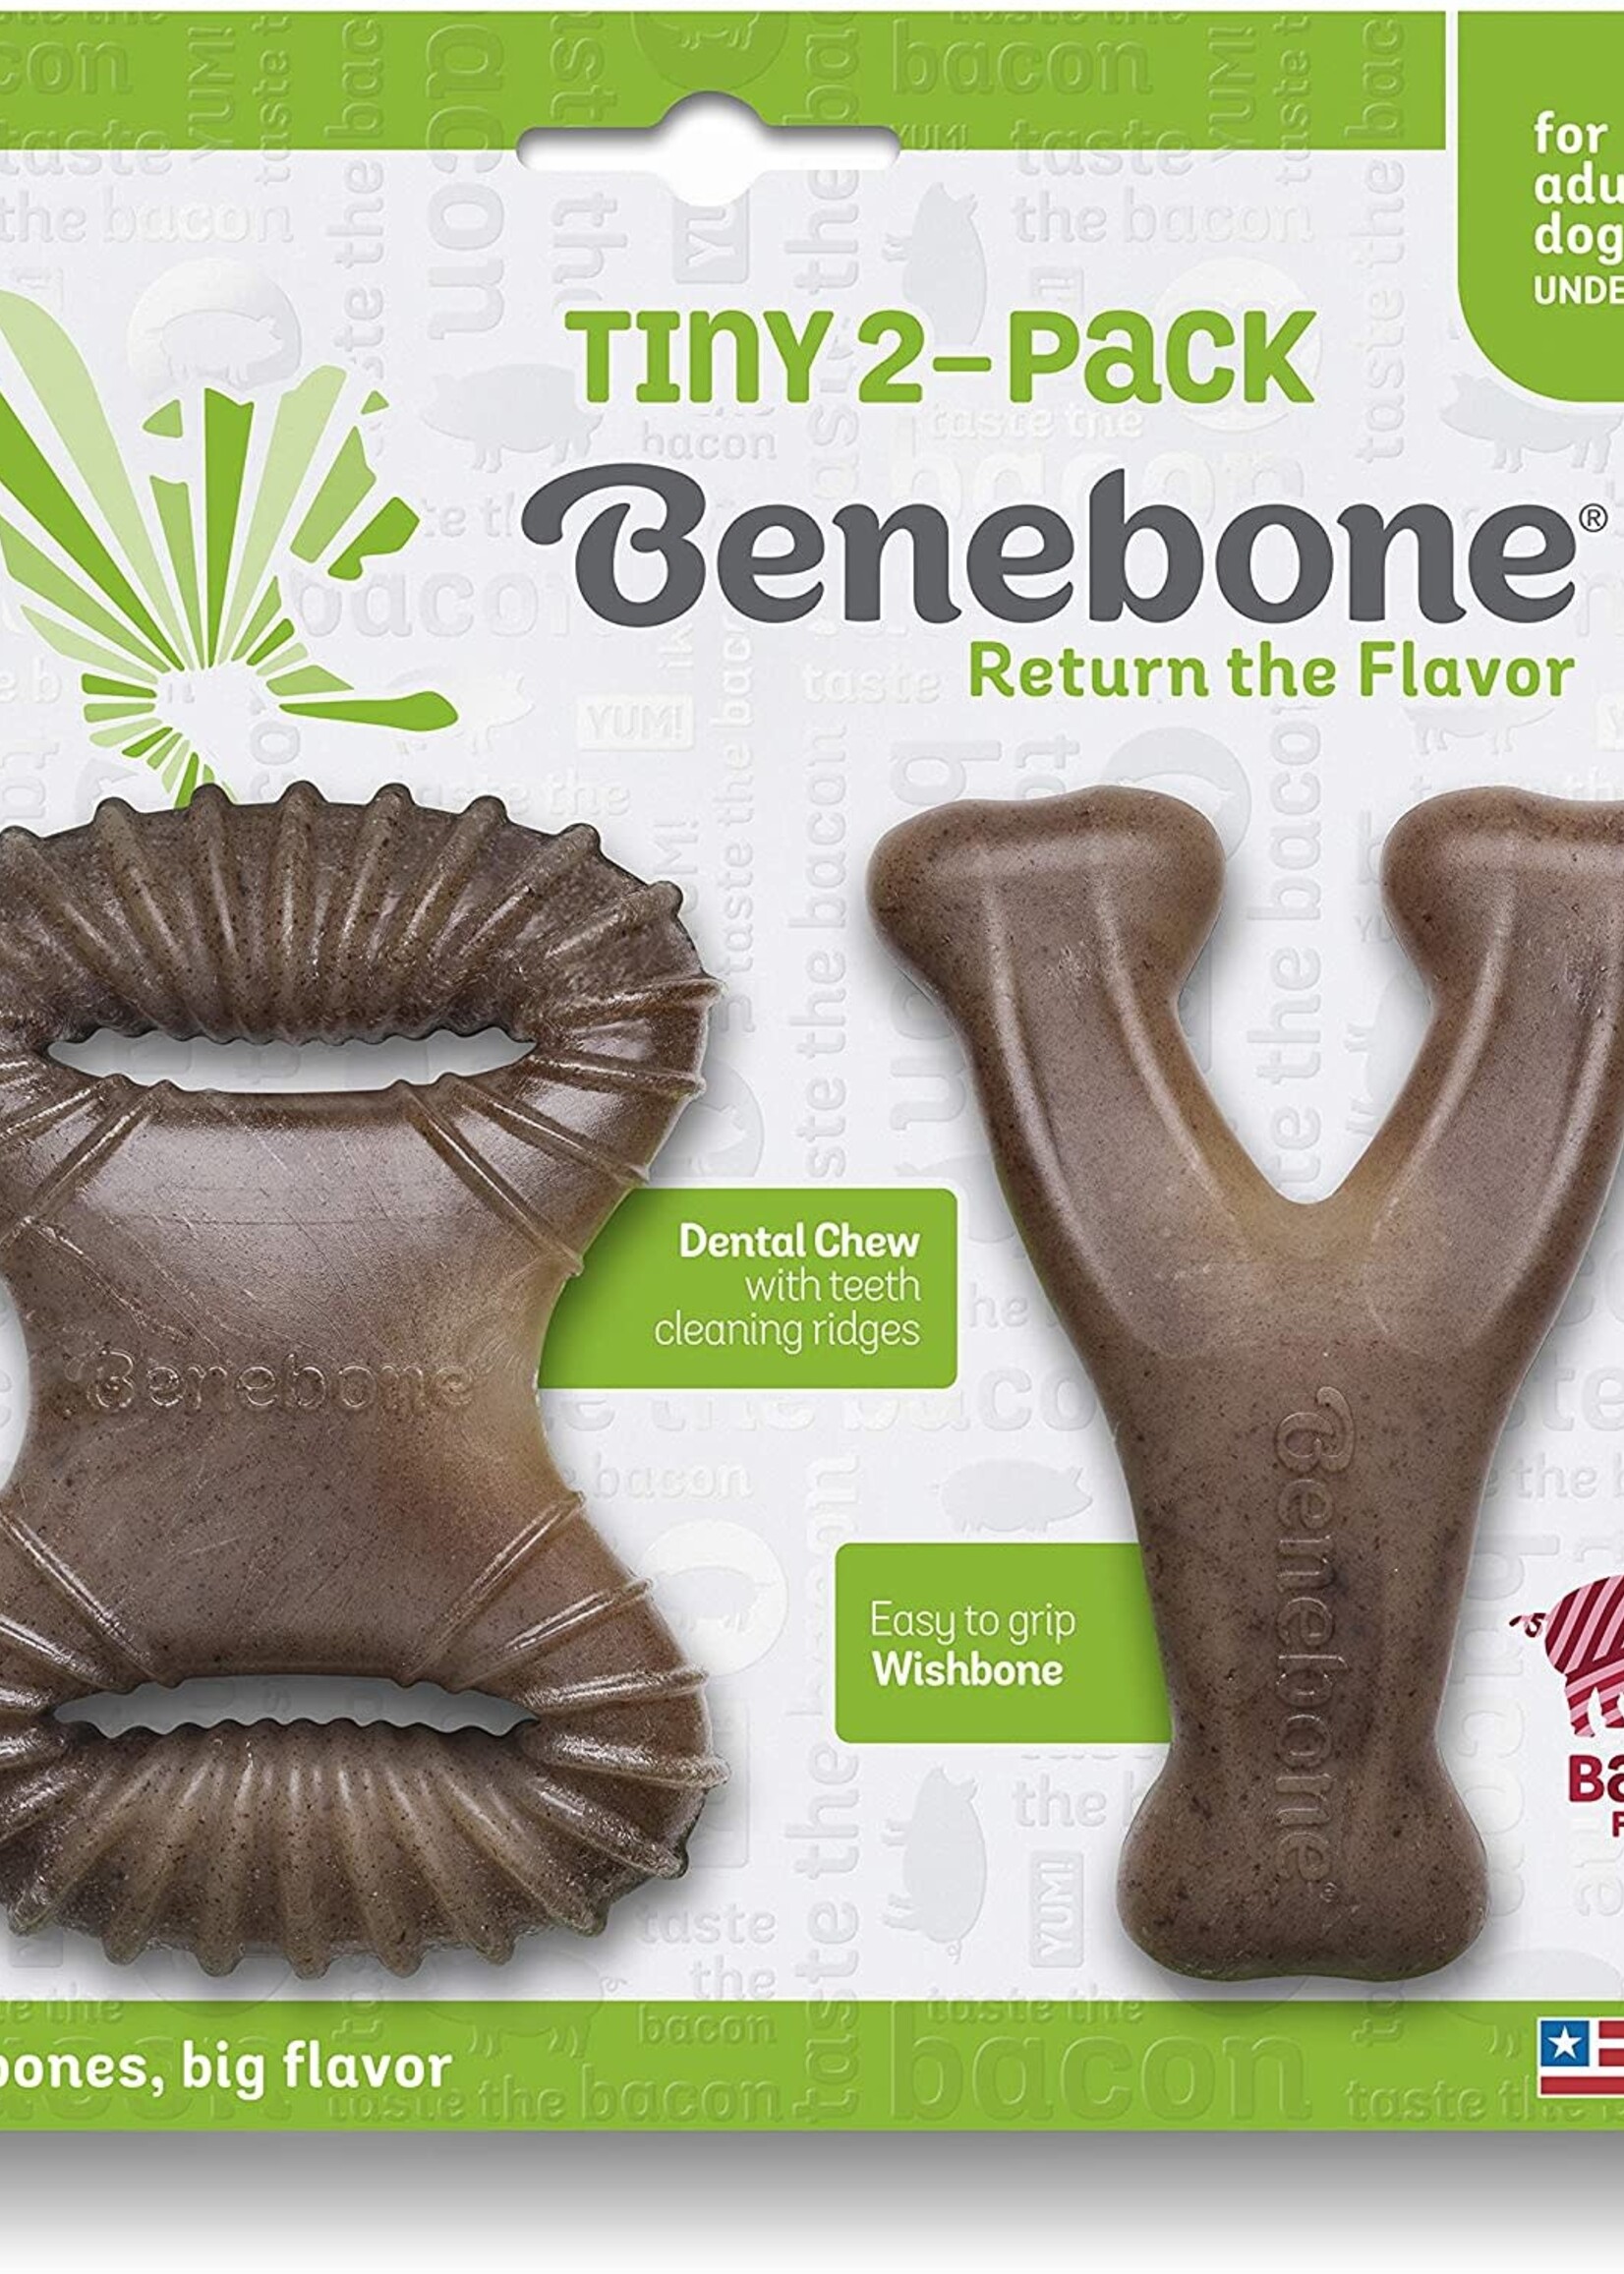 Benebone Benebone Bacon Flavor Tiny 2-Pack Dental Chew & Wishbone Tough Dog Chew Toy